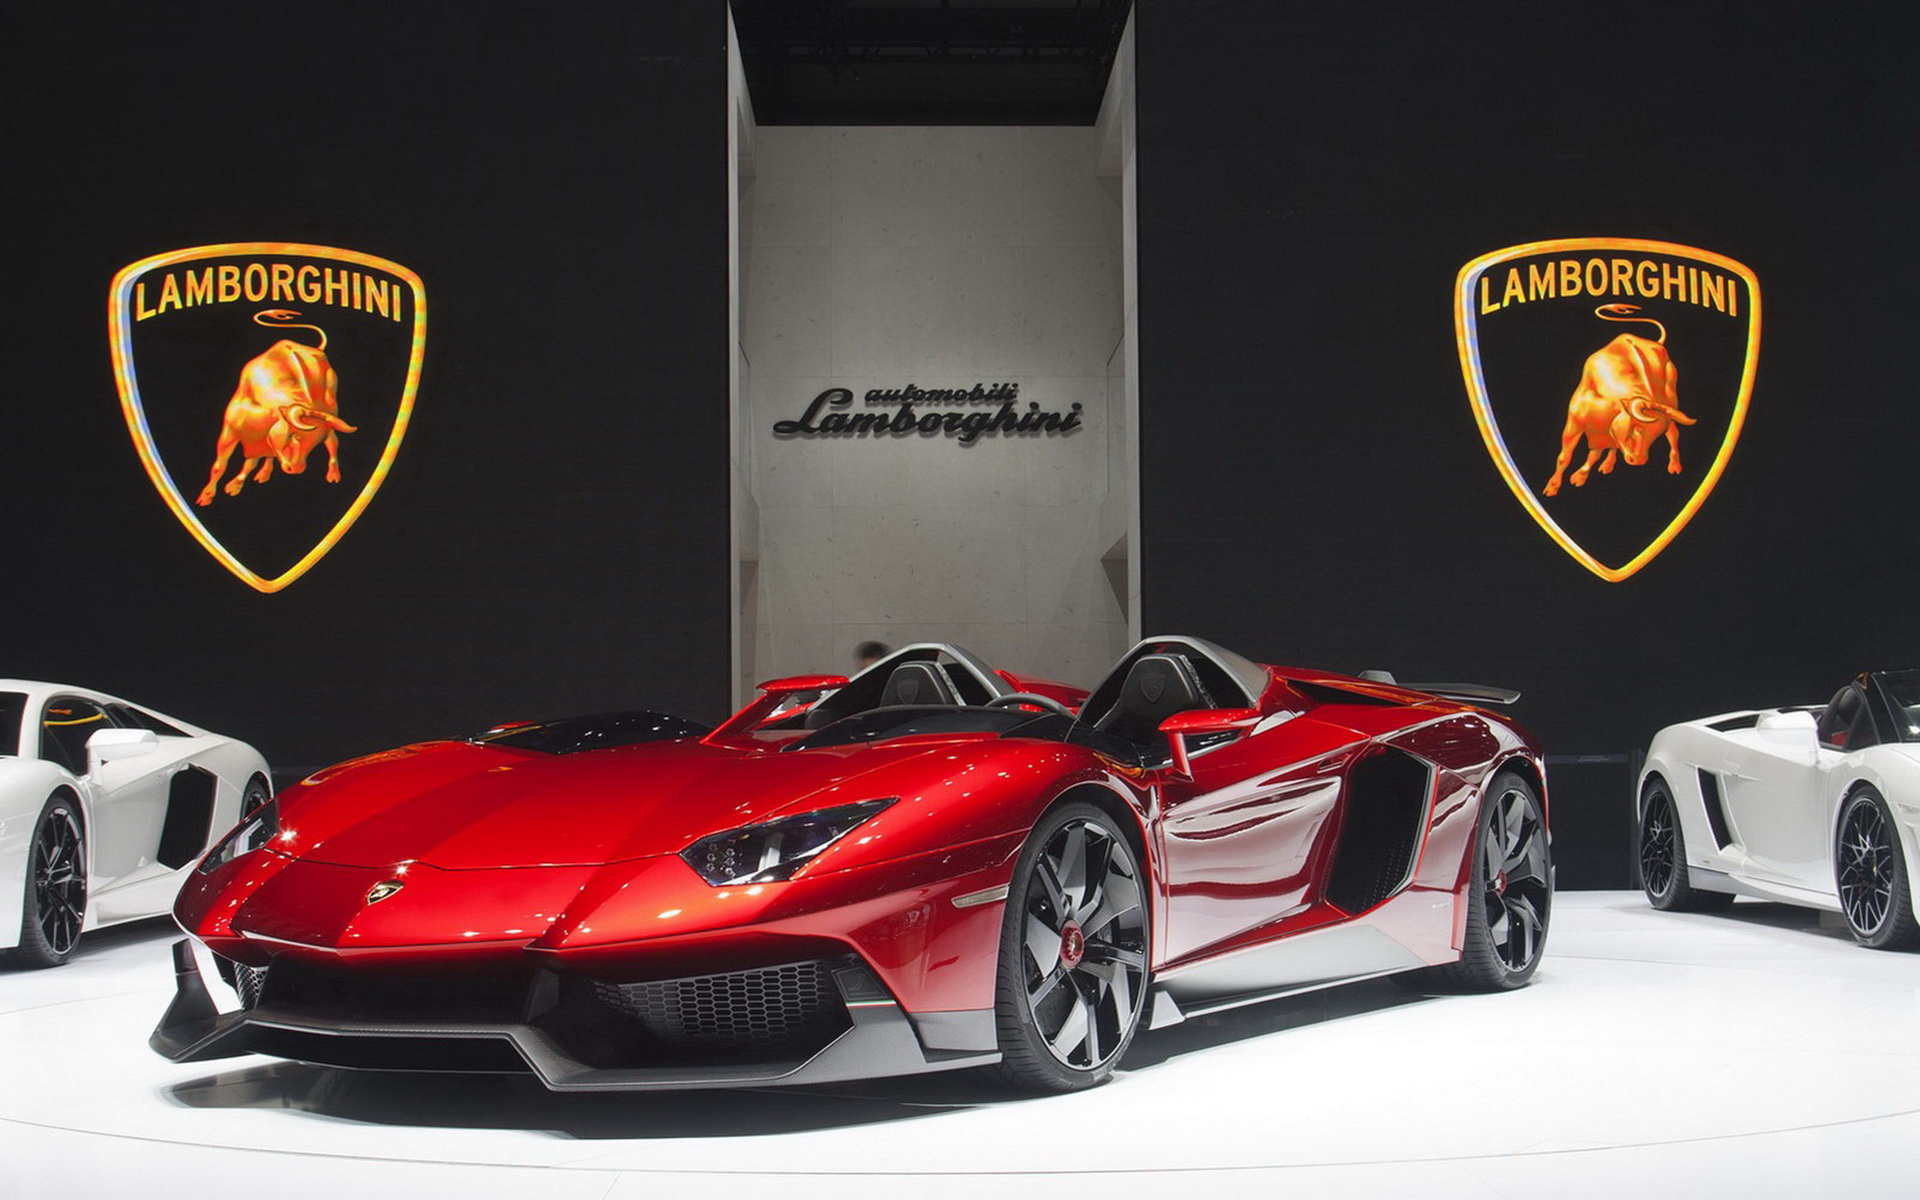 Télécharger des fonds d'écran Lamborghini Aventador J HD